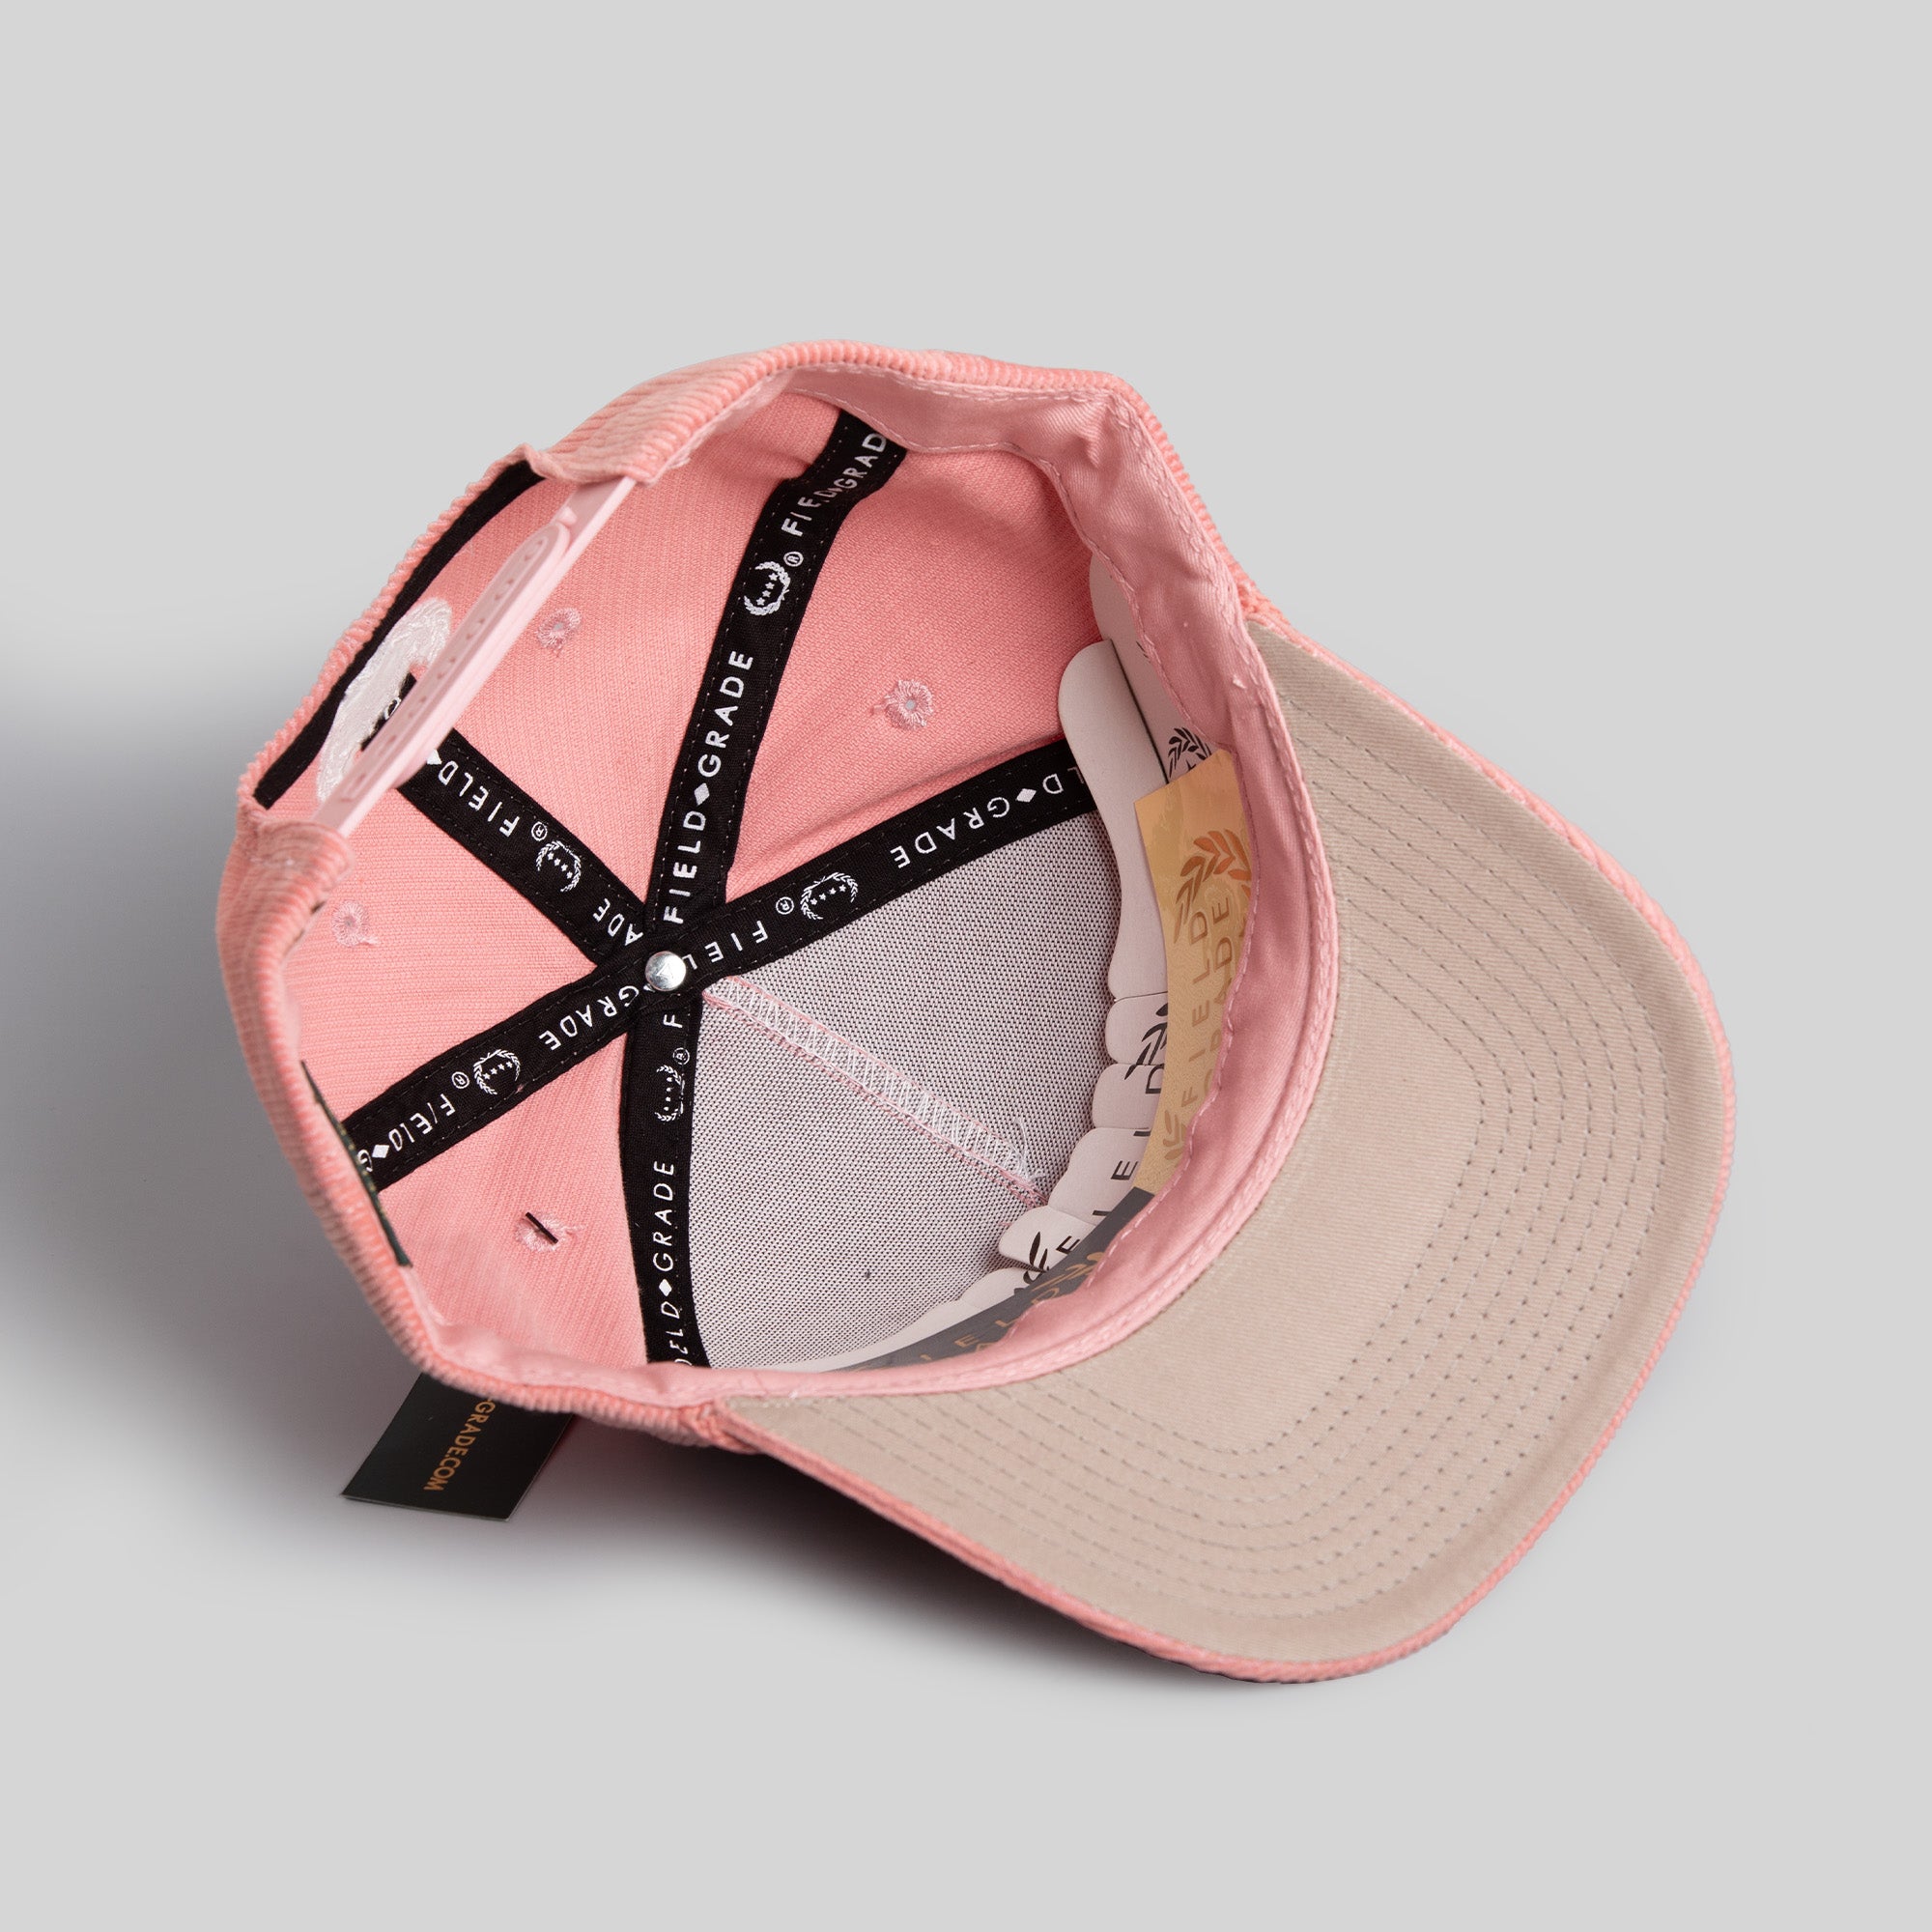 RESPECTFULLY ROSE PINK CORDUROY TRUCKER HAT